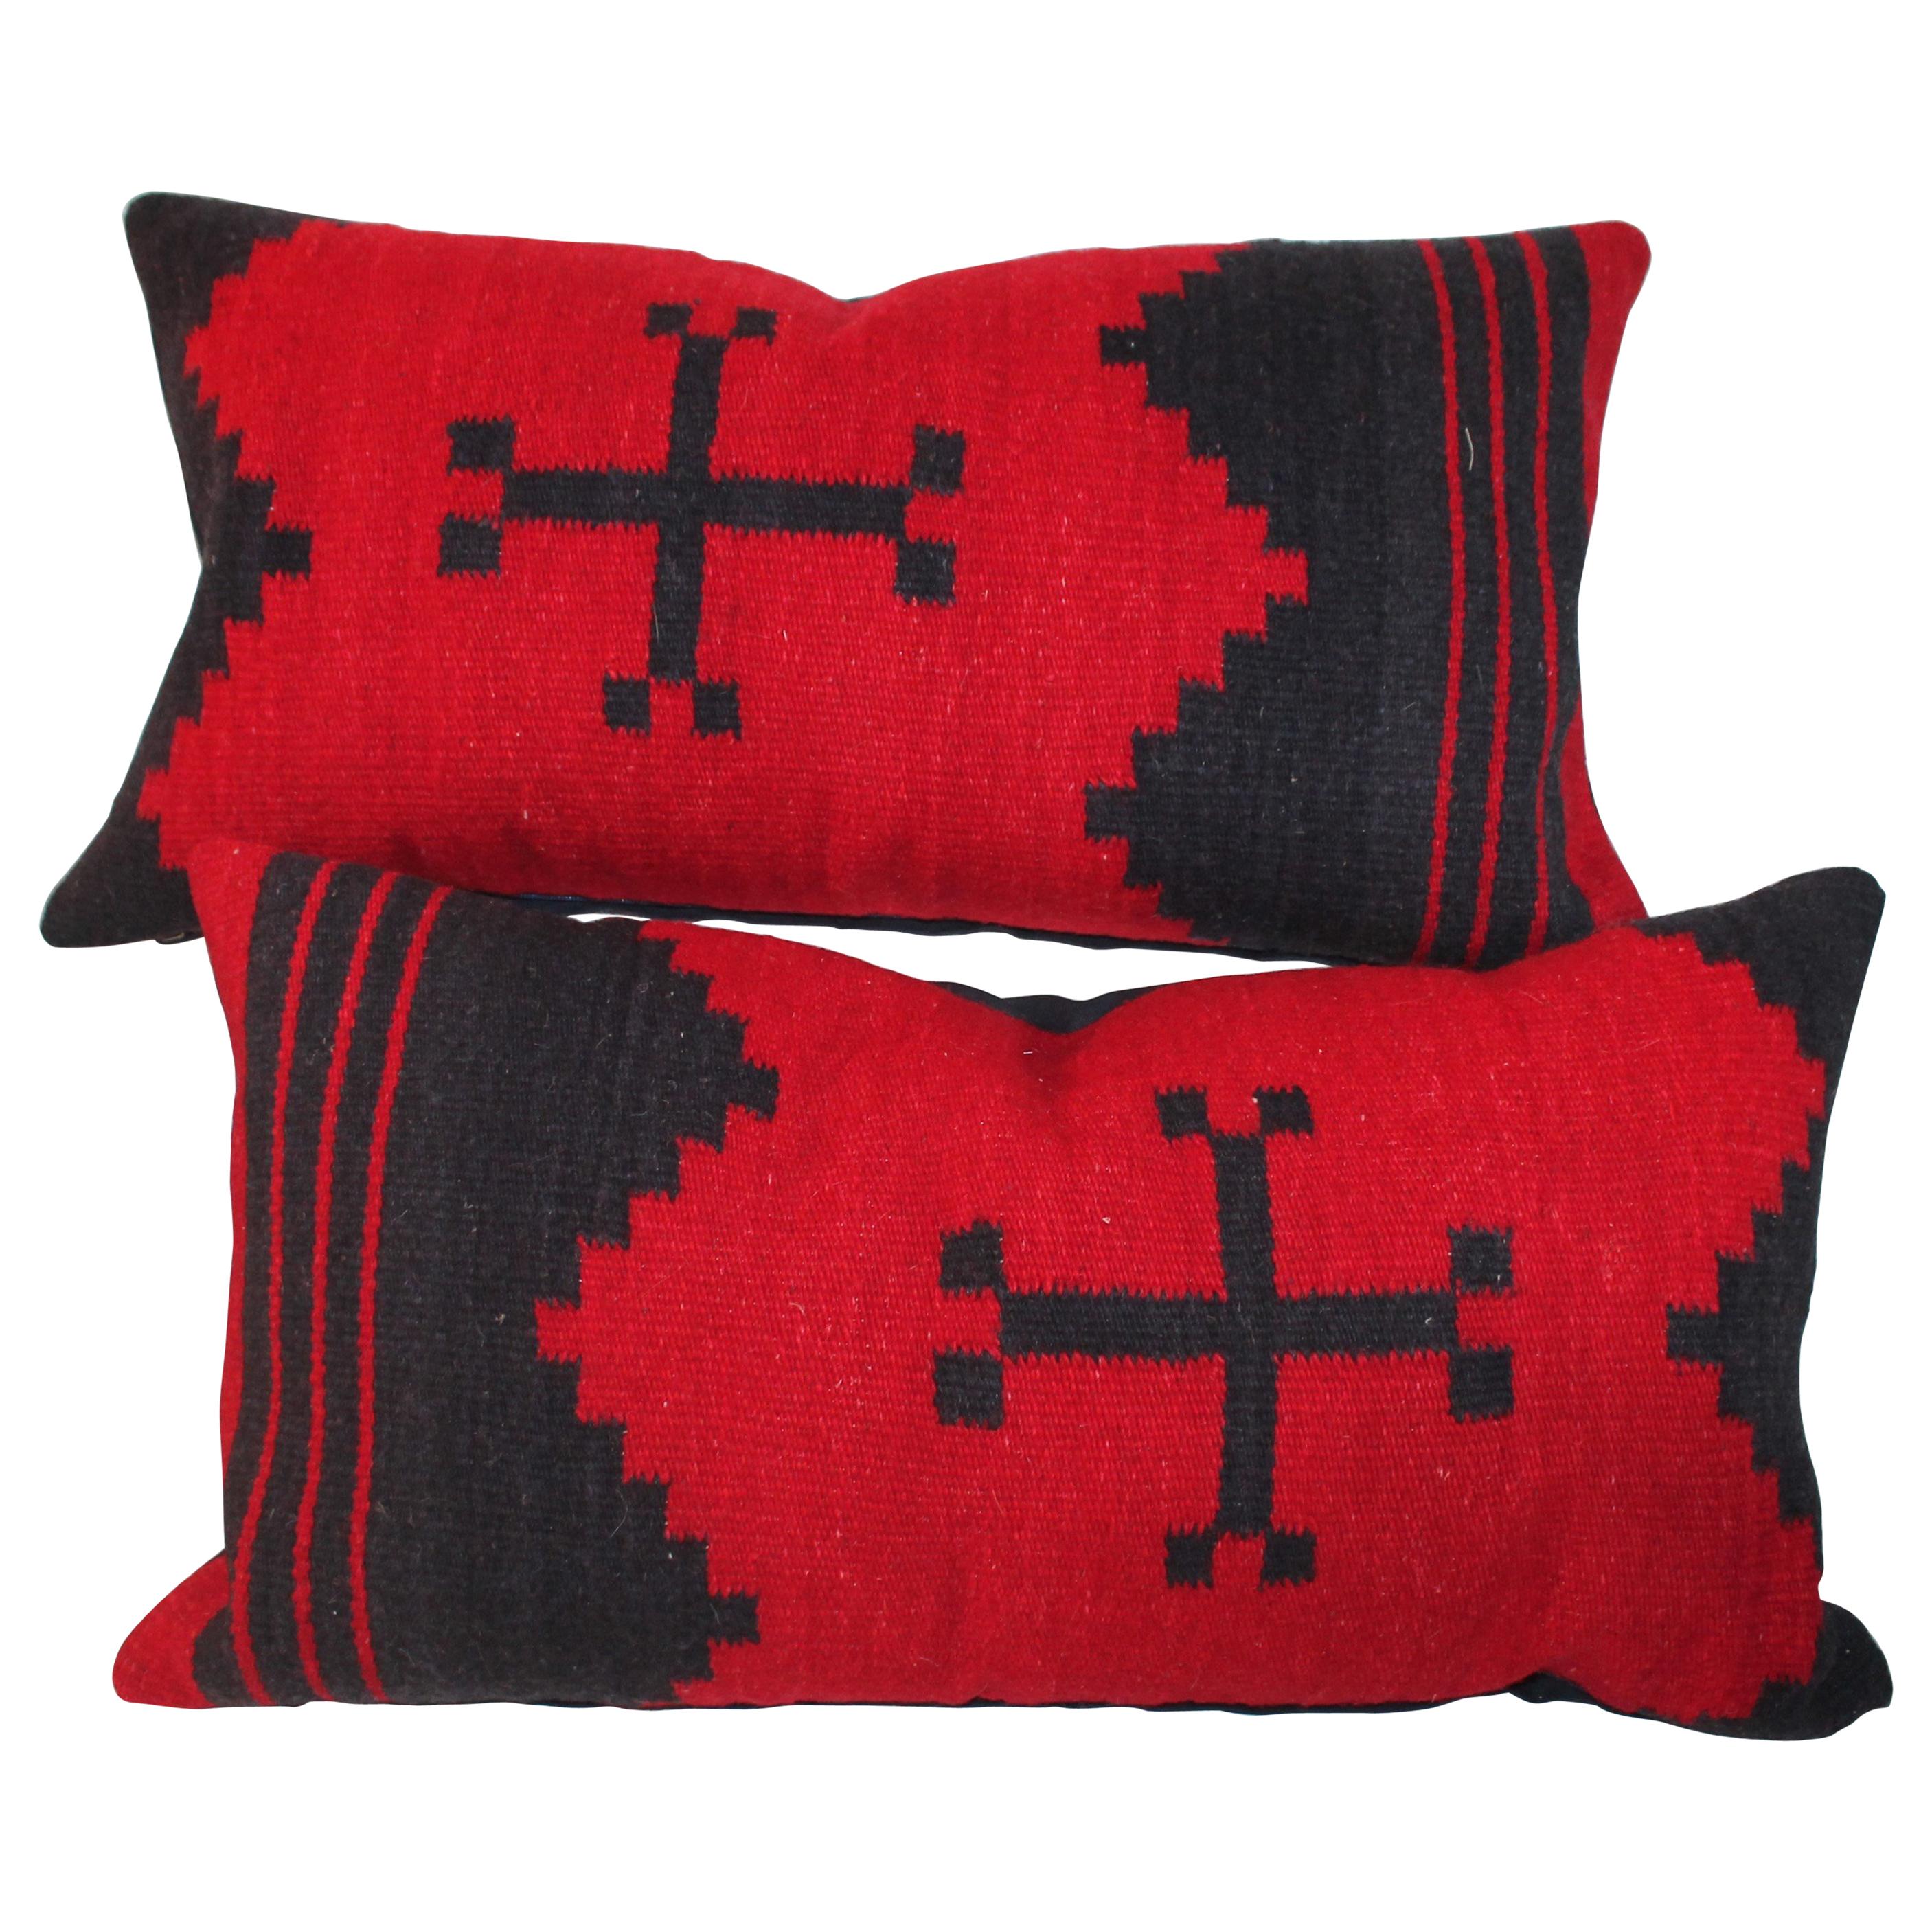 Pair of Navajo Indian Weaving Pillows